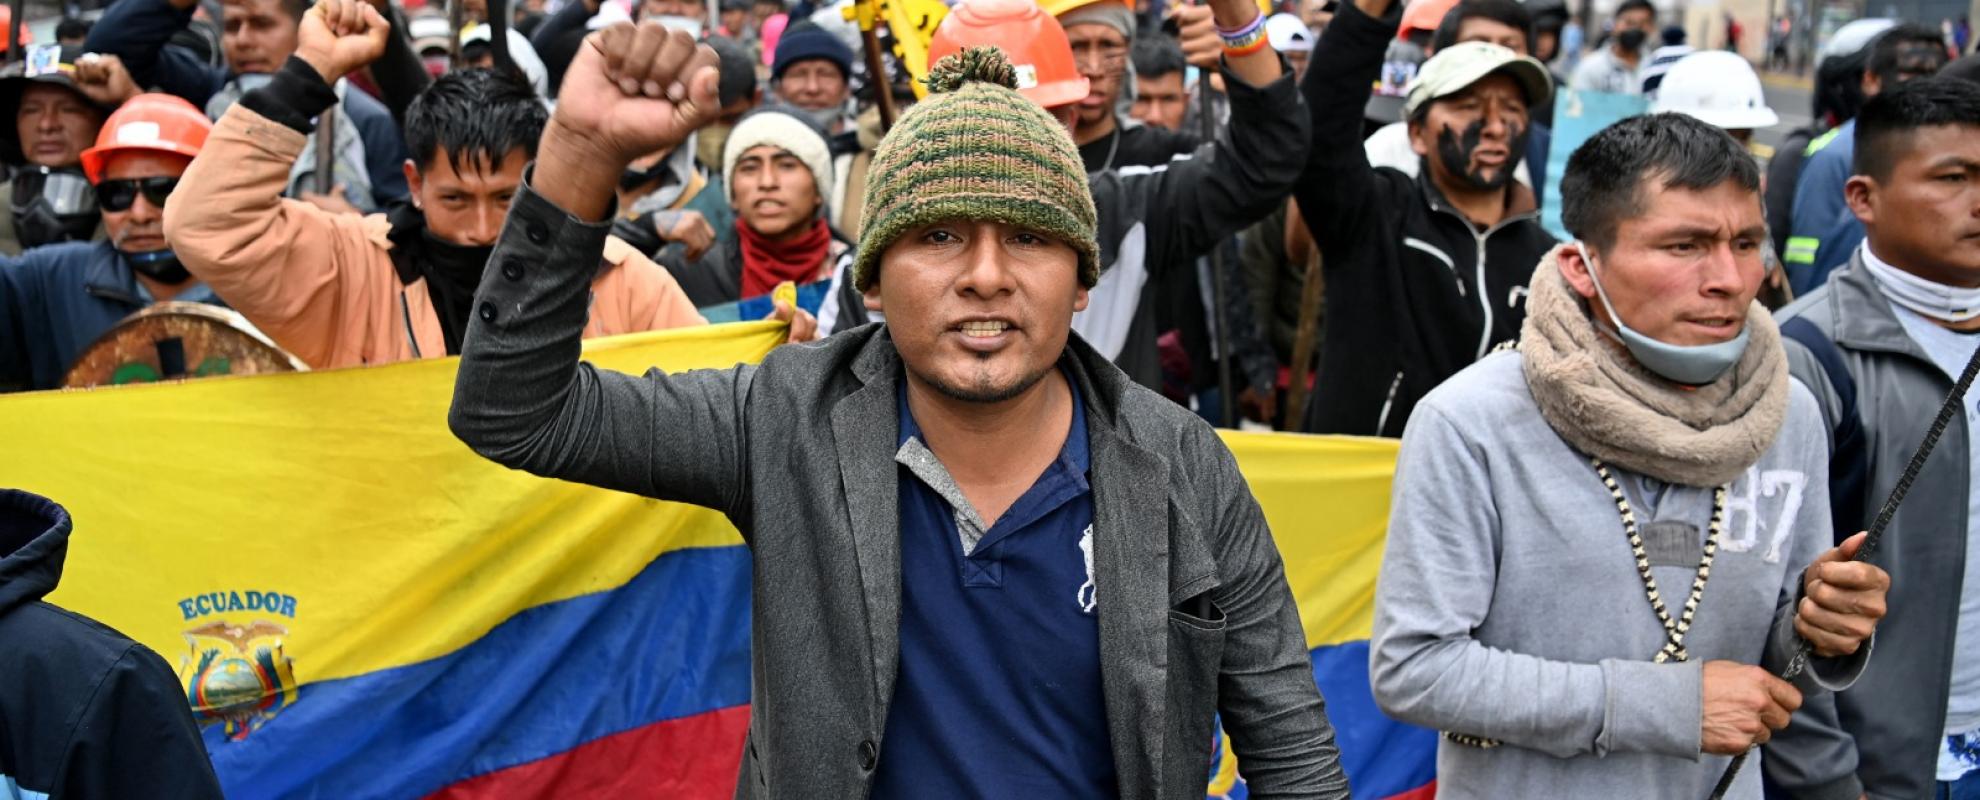 Protesterende mensen in de straten van Ecuador